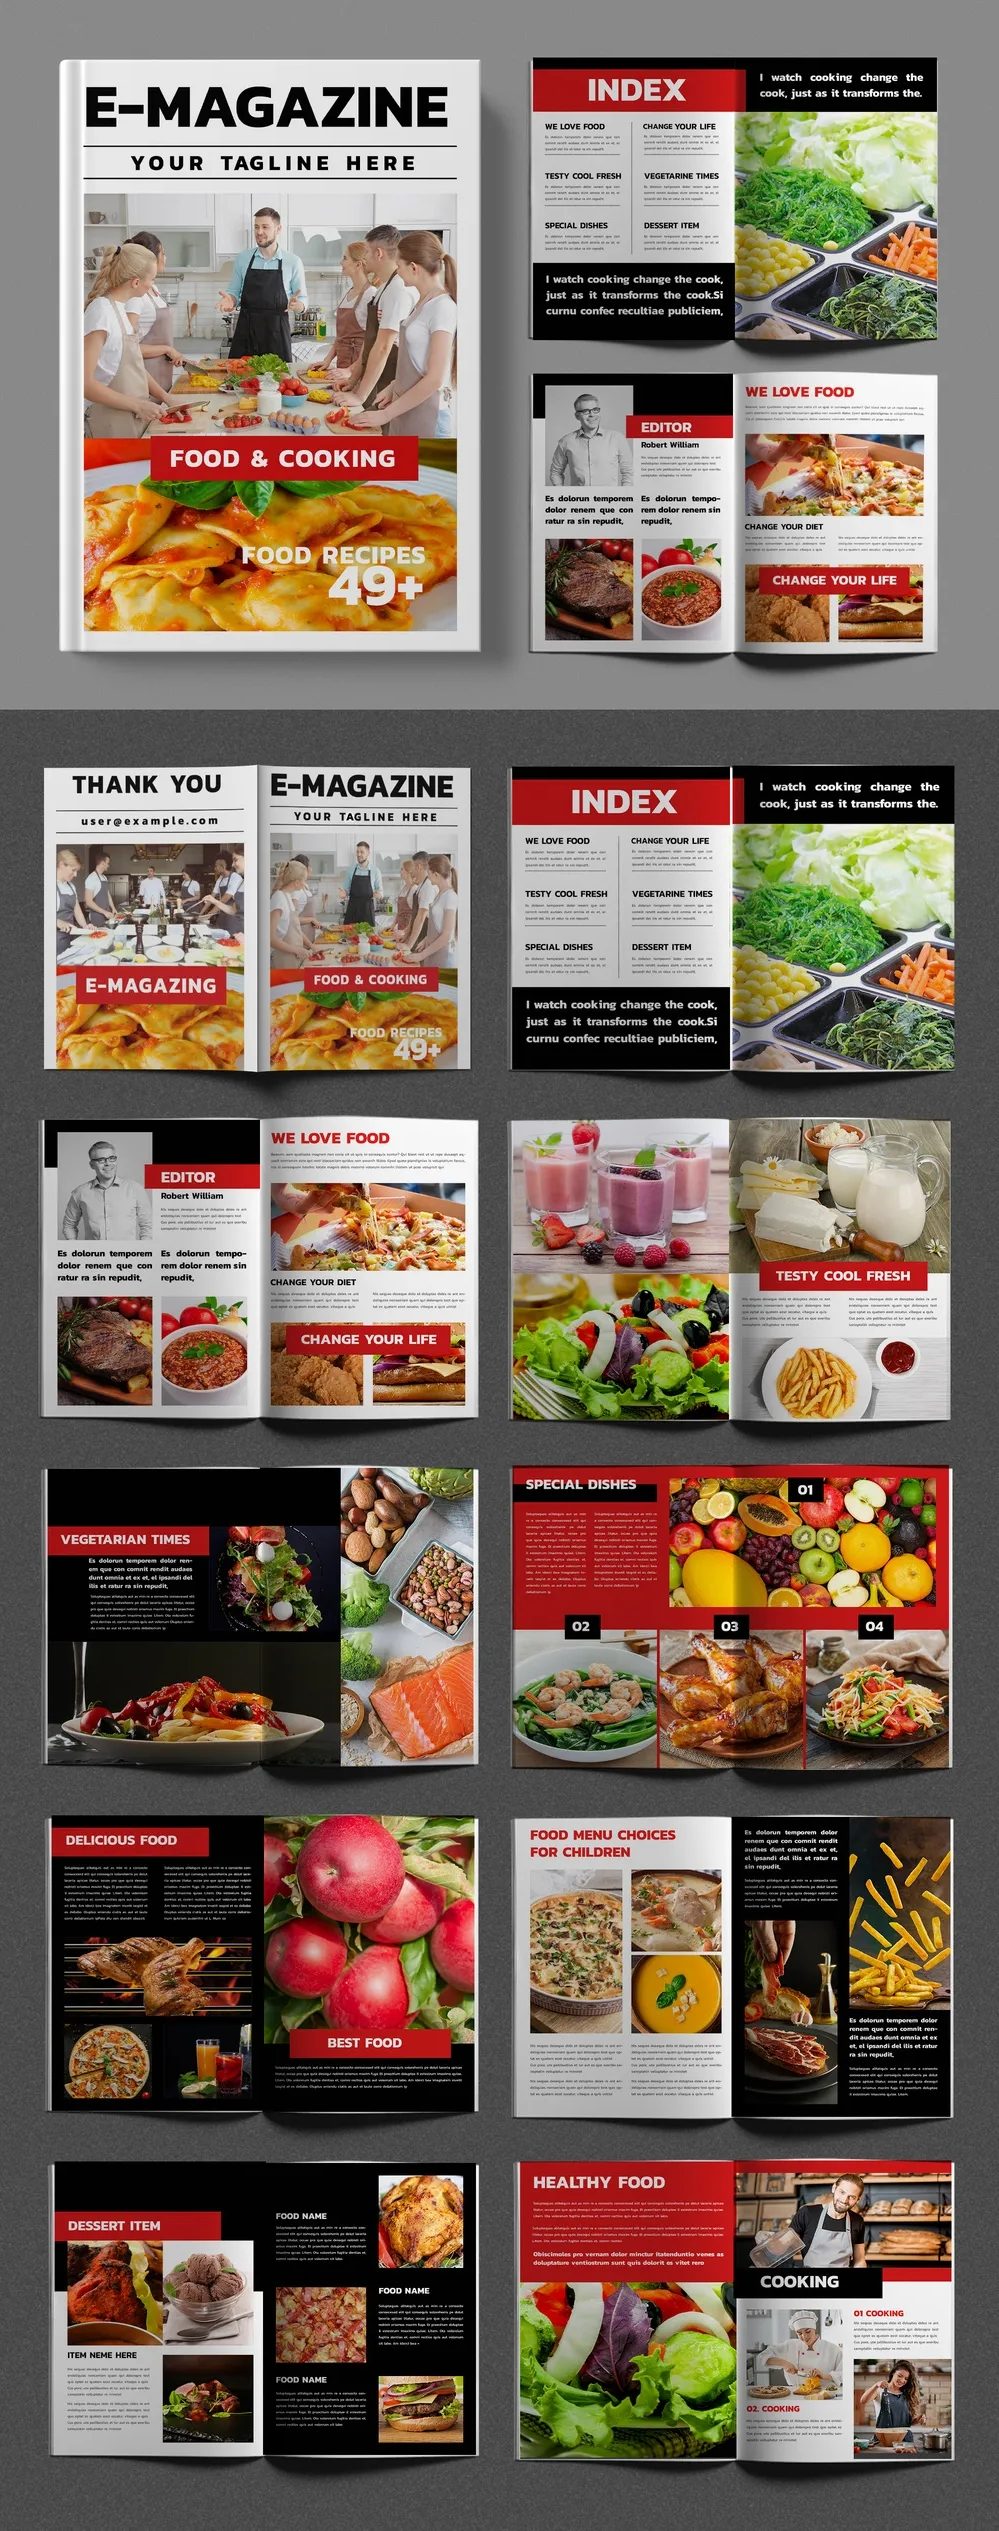 Adobestock - Cook Book Magazine Design 718545644